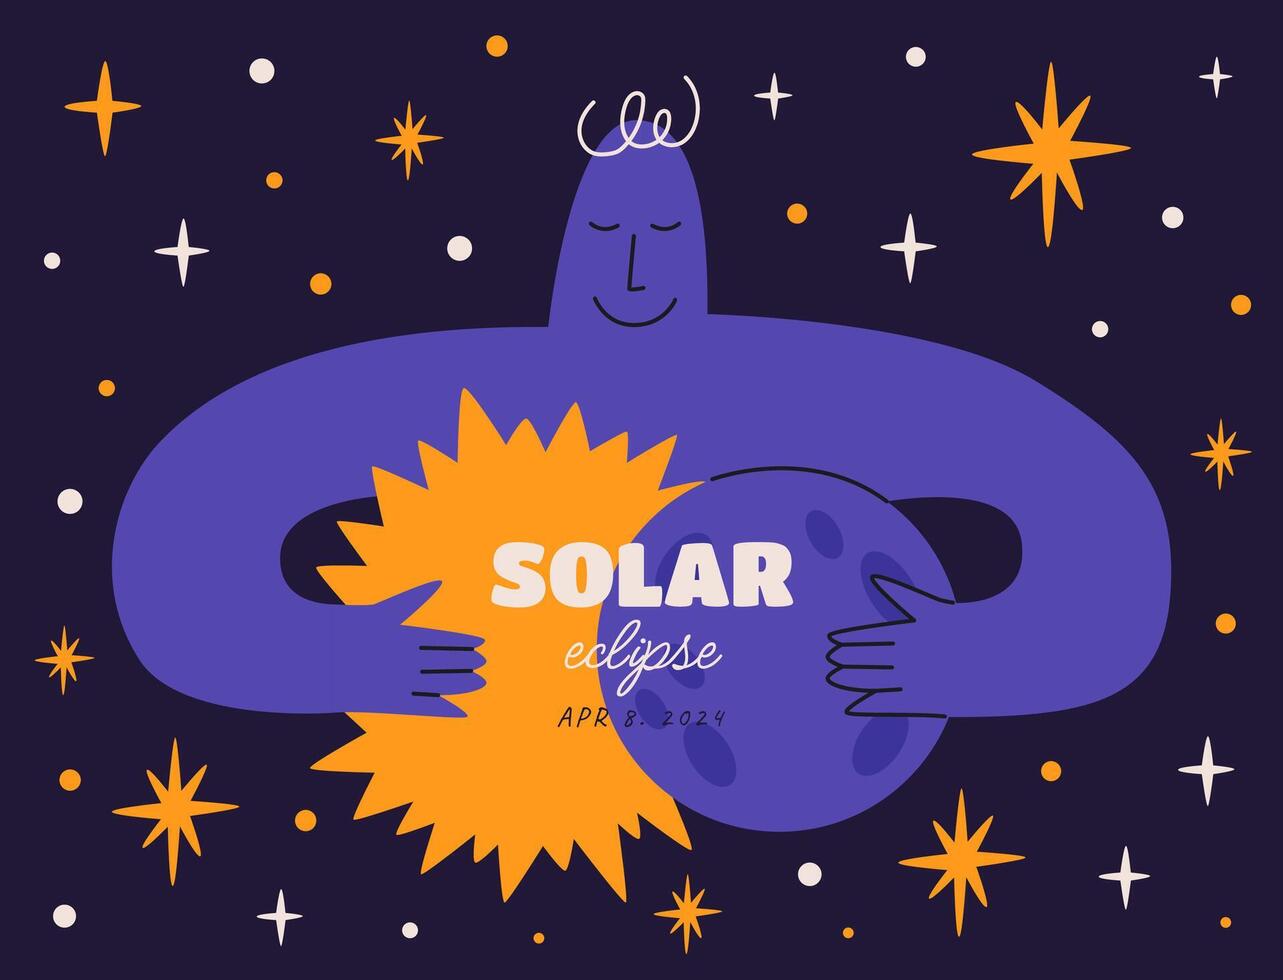 Solar eclipse banner vector